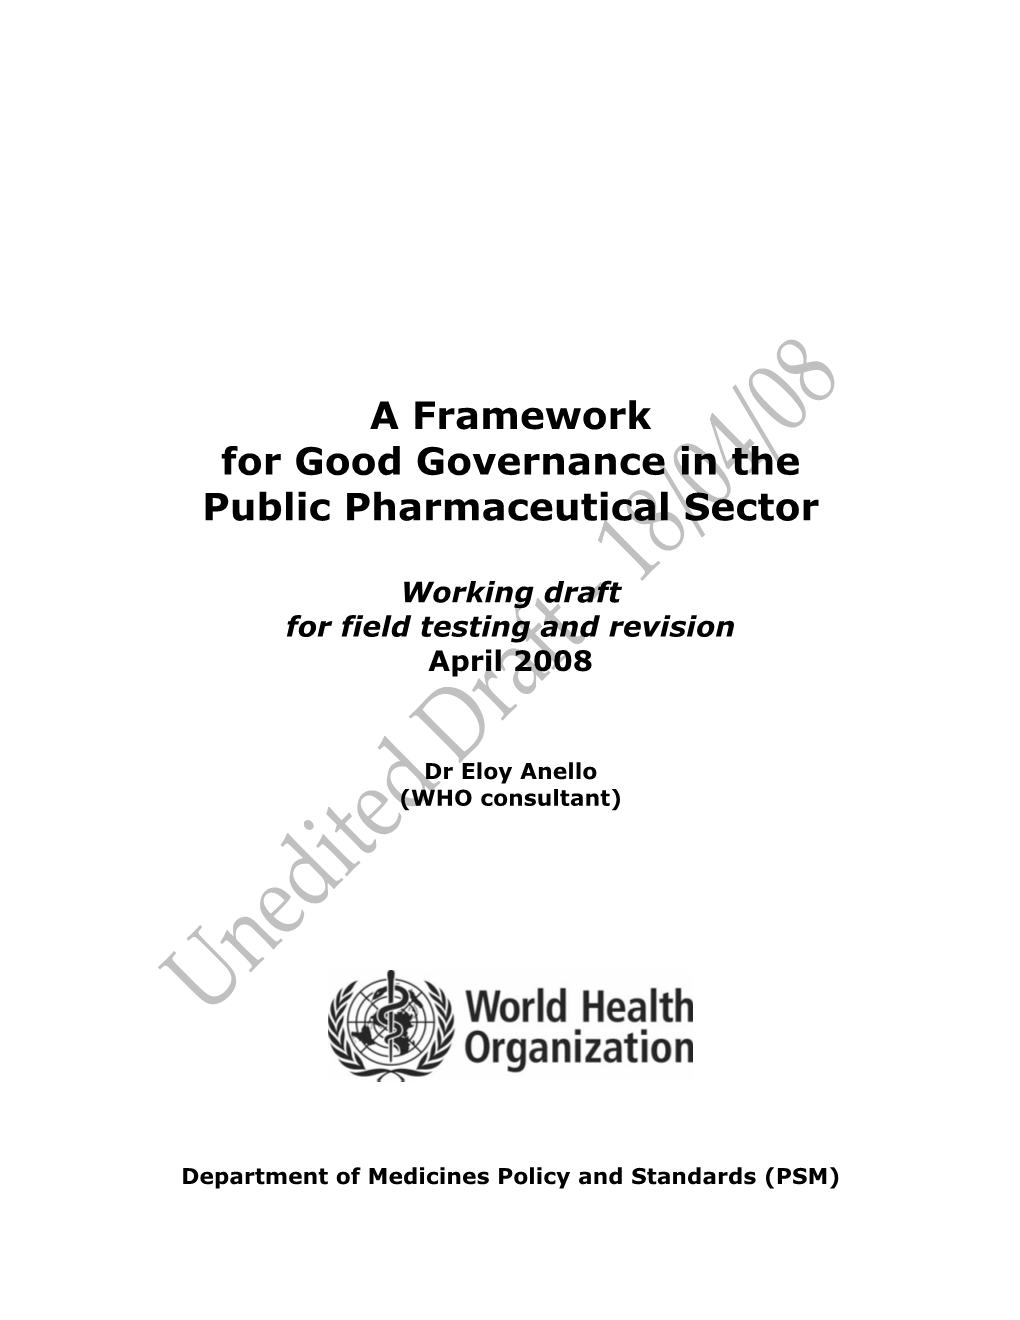 A Framework for Good Governance in the Public Pharmaceutical Sector